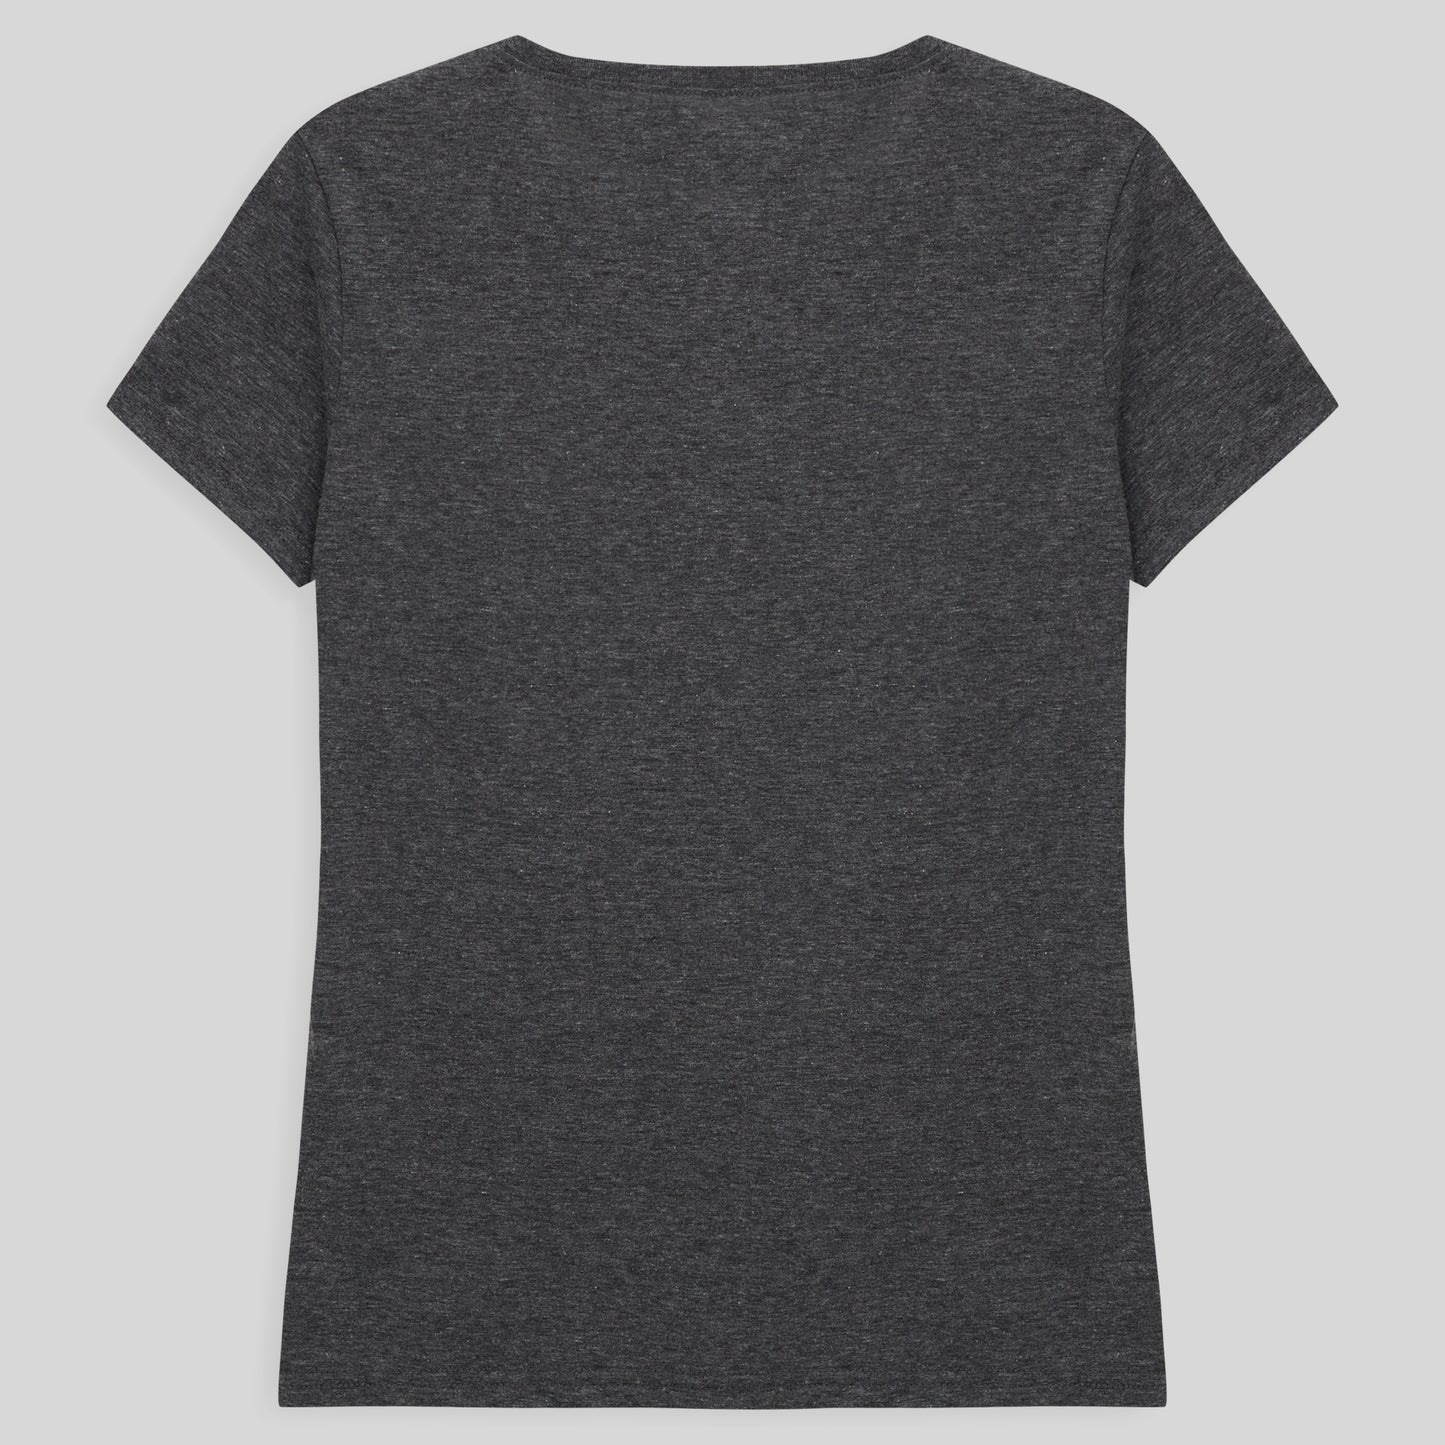 Camiseta Slim Gola V Feminina - Mescla Escuro